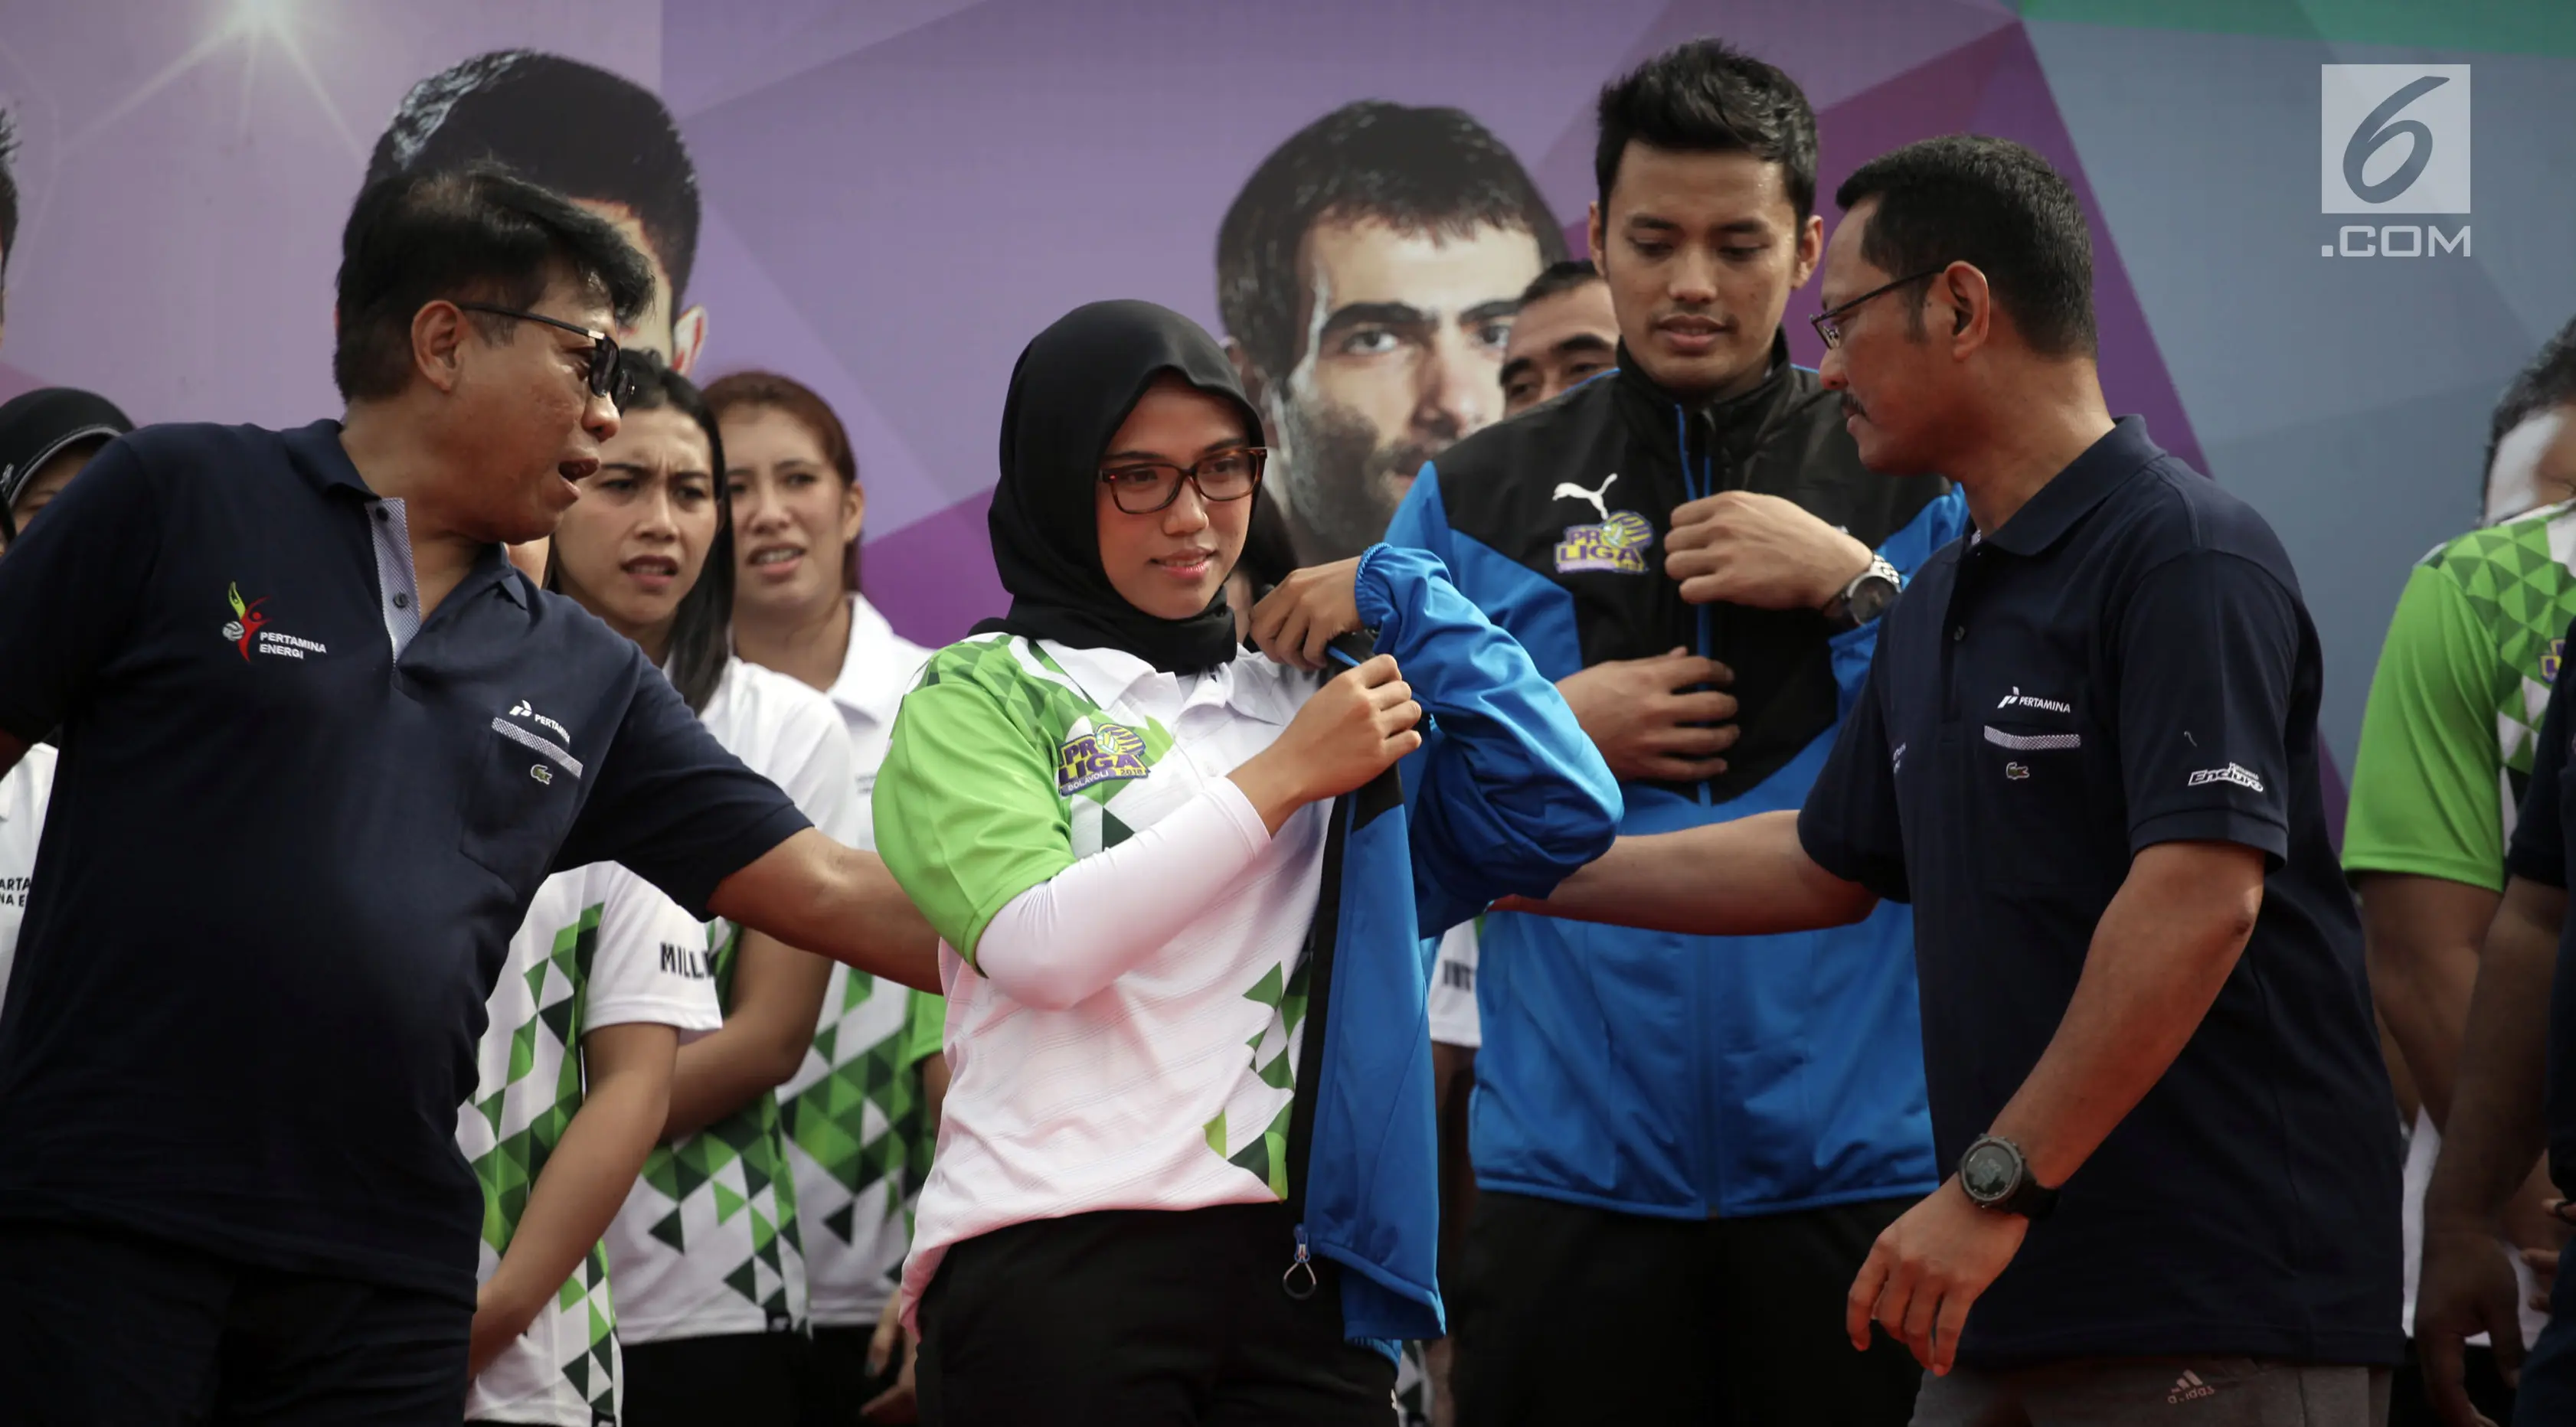 Direktur Manajemen Aset Pertamina Dwi Wahyu Daryoto mengenakan jaket kepada pemain putri saat Launching Tim Bola Voli Jakarta Pertamina Energi di Kantor Pusat Pertamina, Jakarta, Jumat (5/1).(Liputan6.com/Arya Manggala)